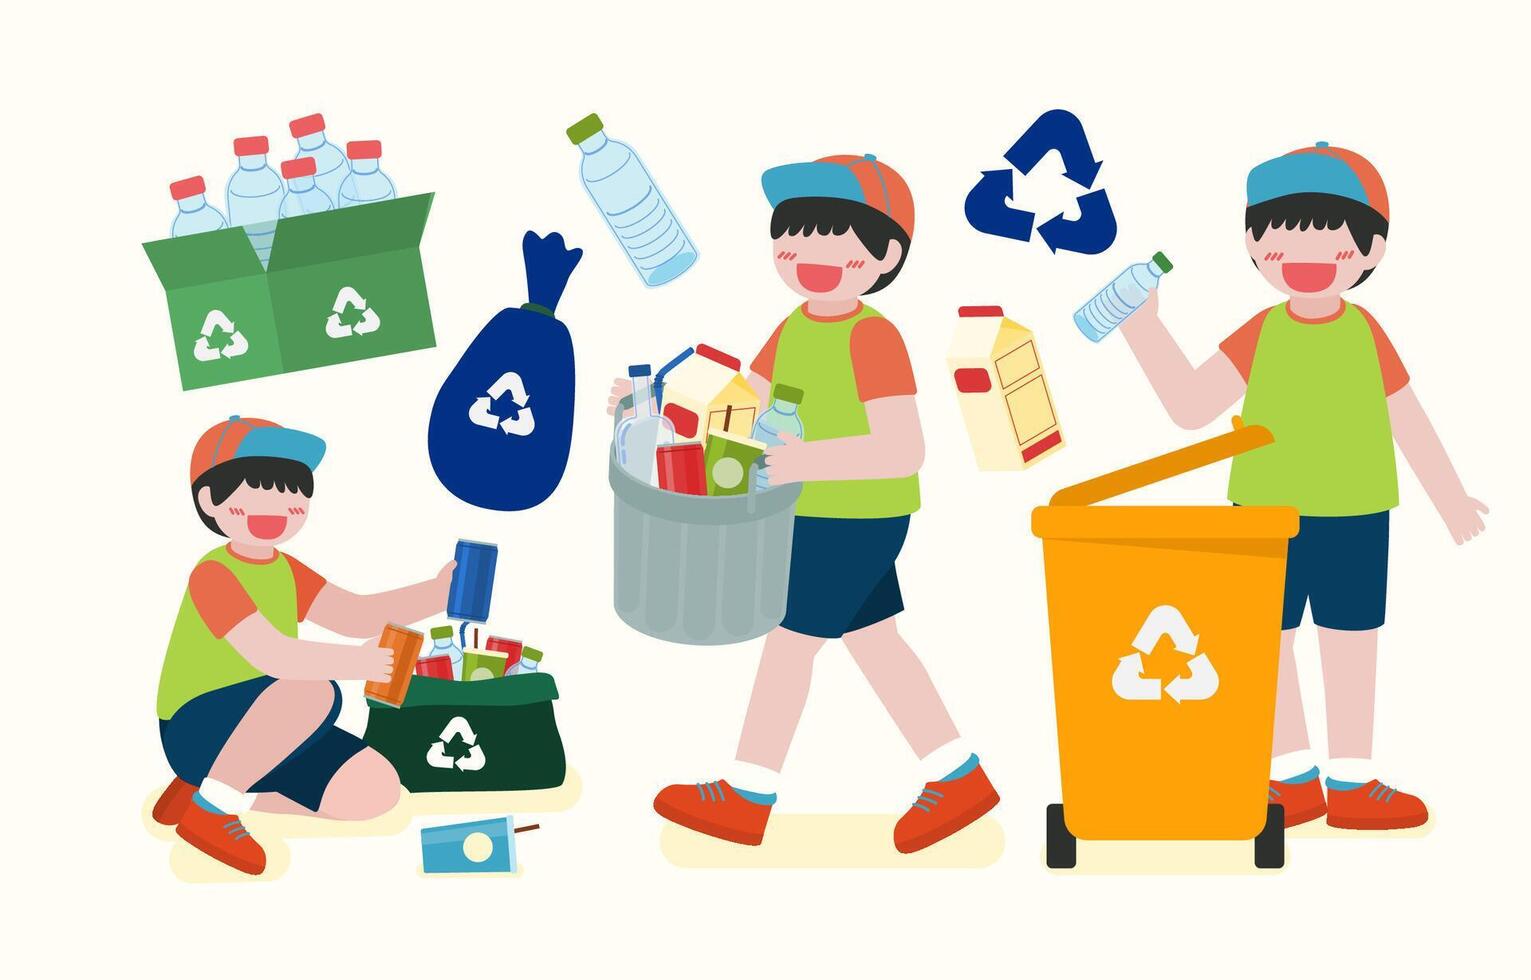 Children help collect plastic bottles in recycling bins vector